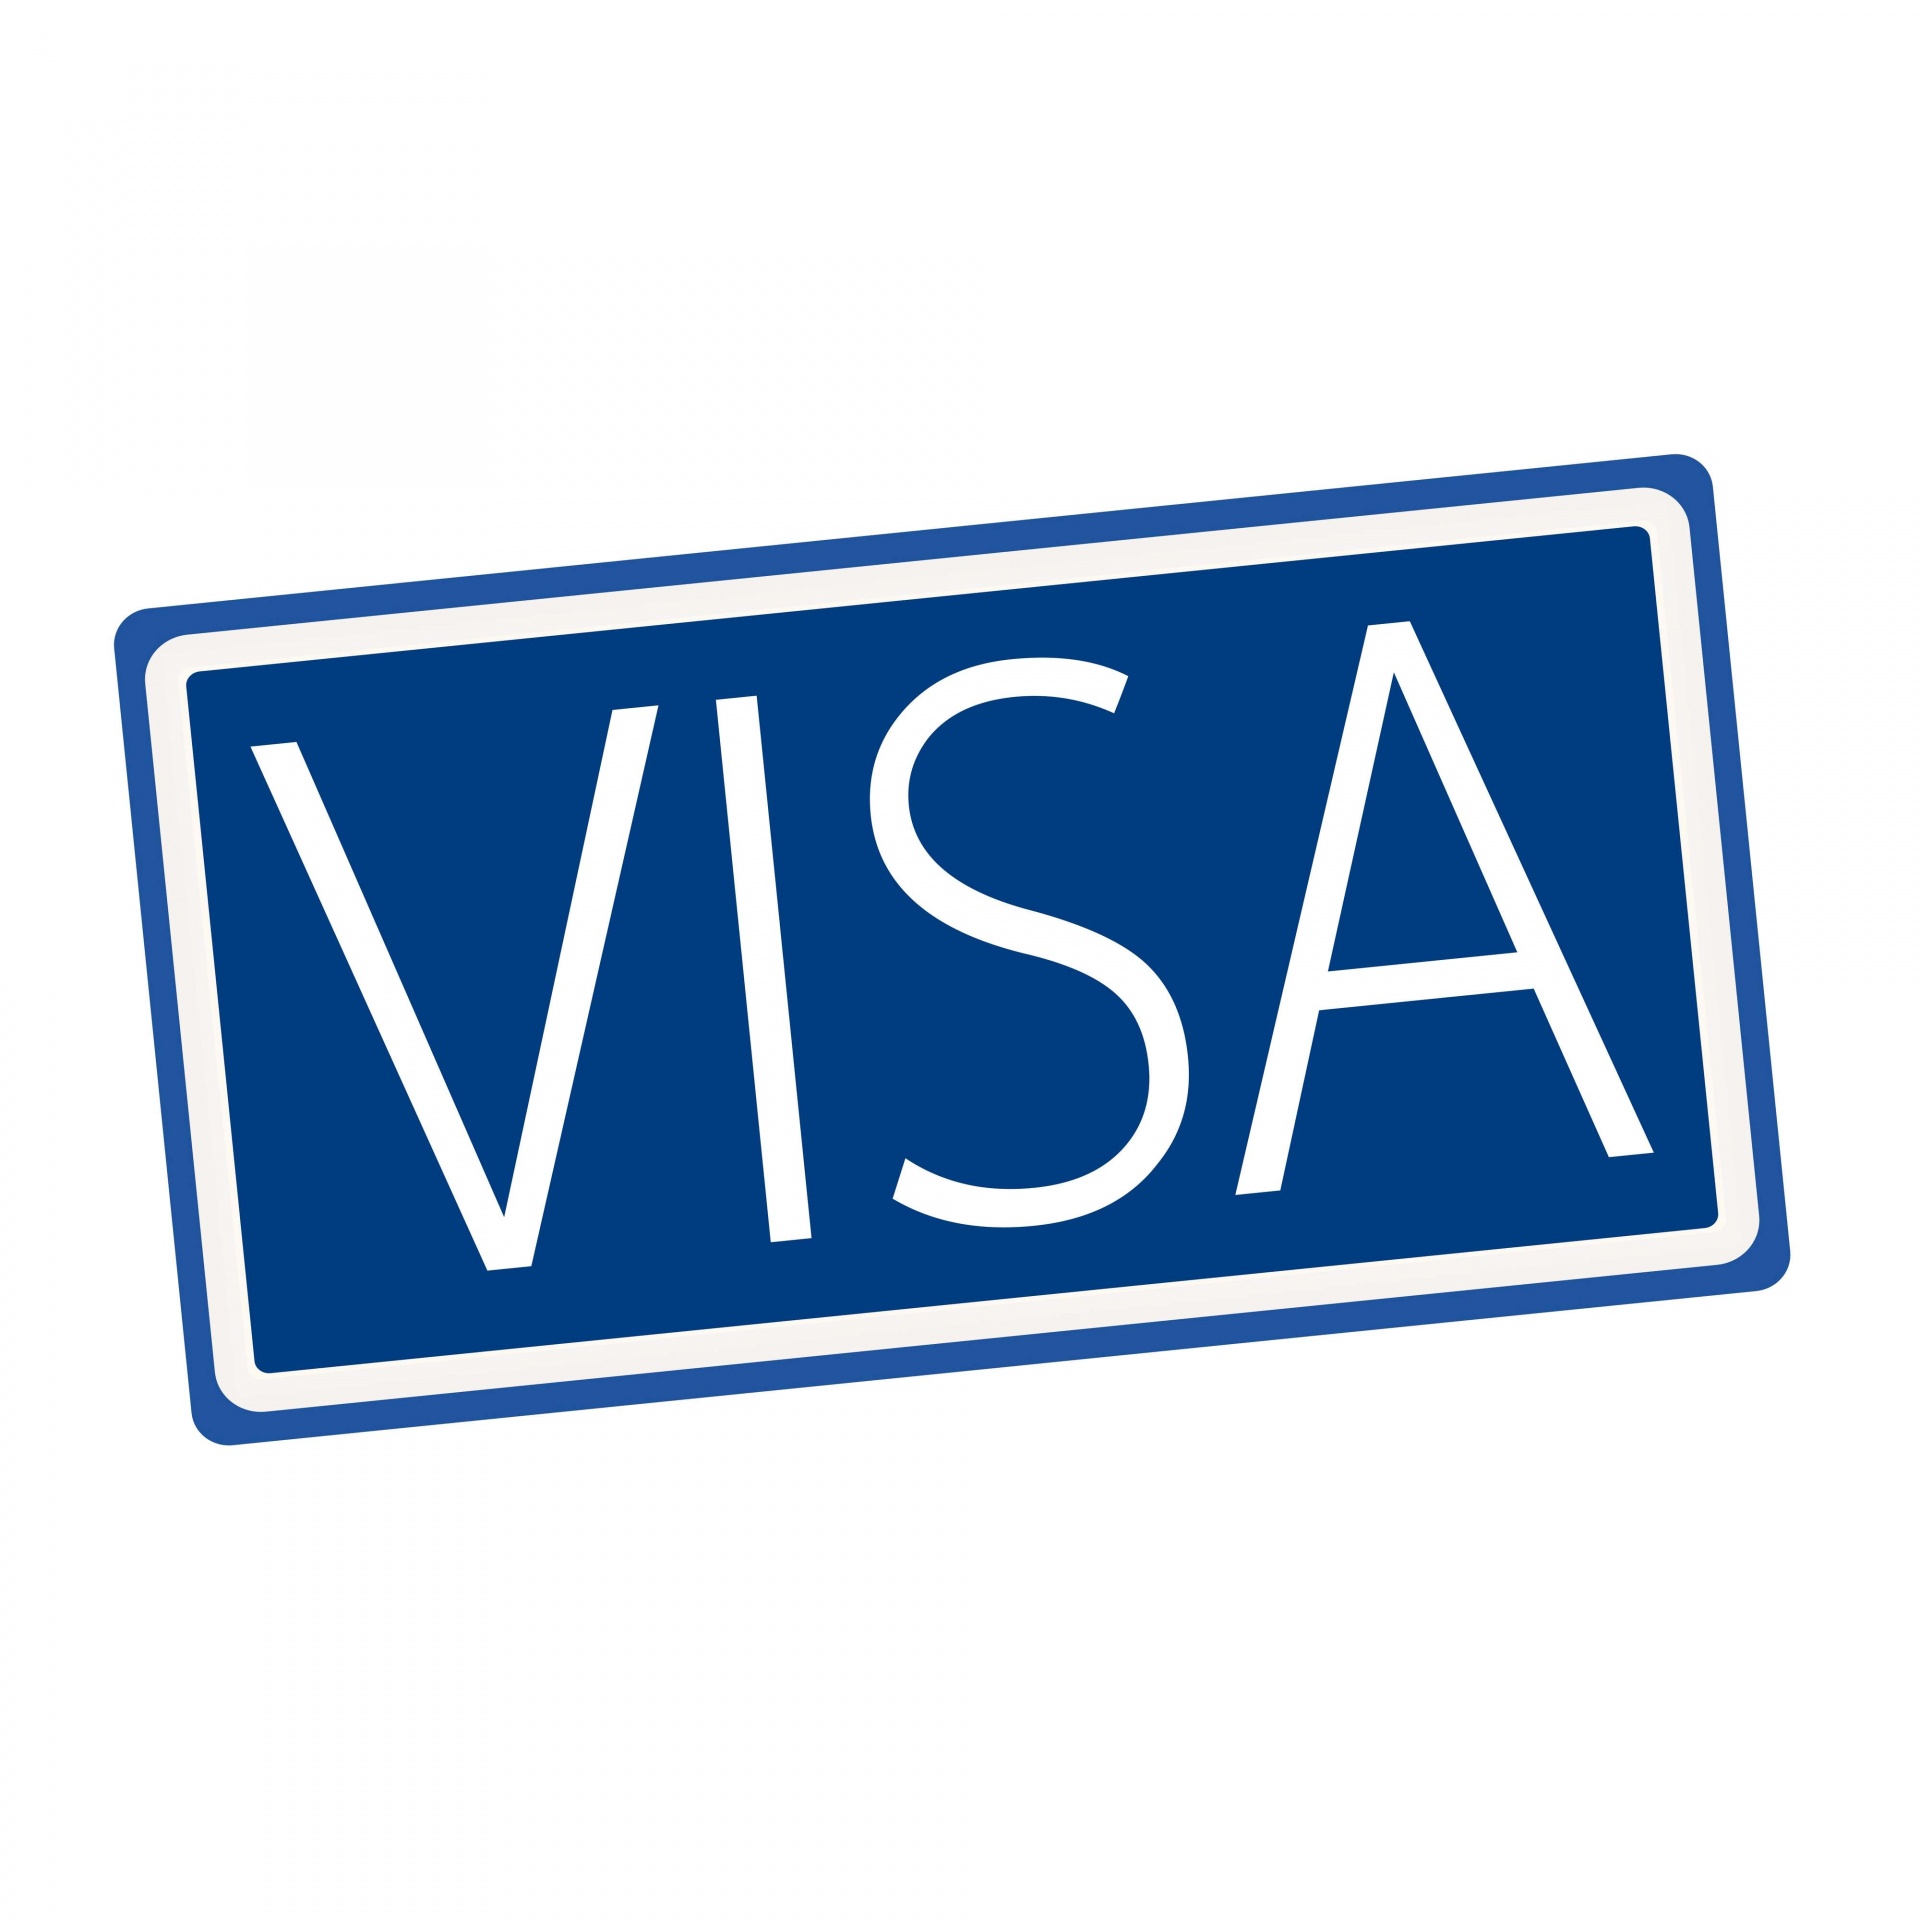 VISA white stamp text on blue